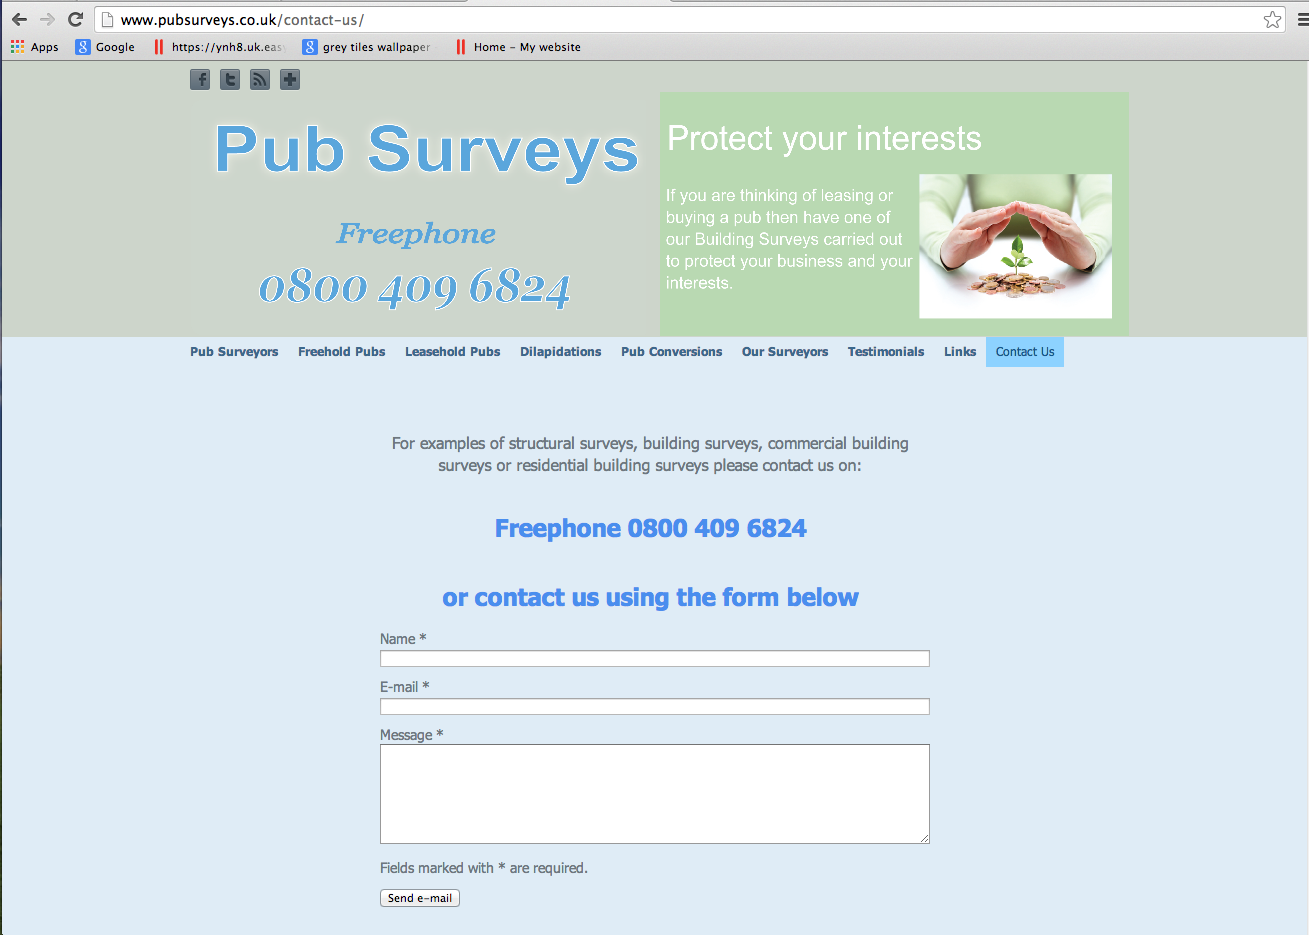 Pubsurveys.co.uk - Contact Us